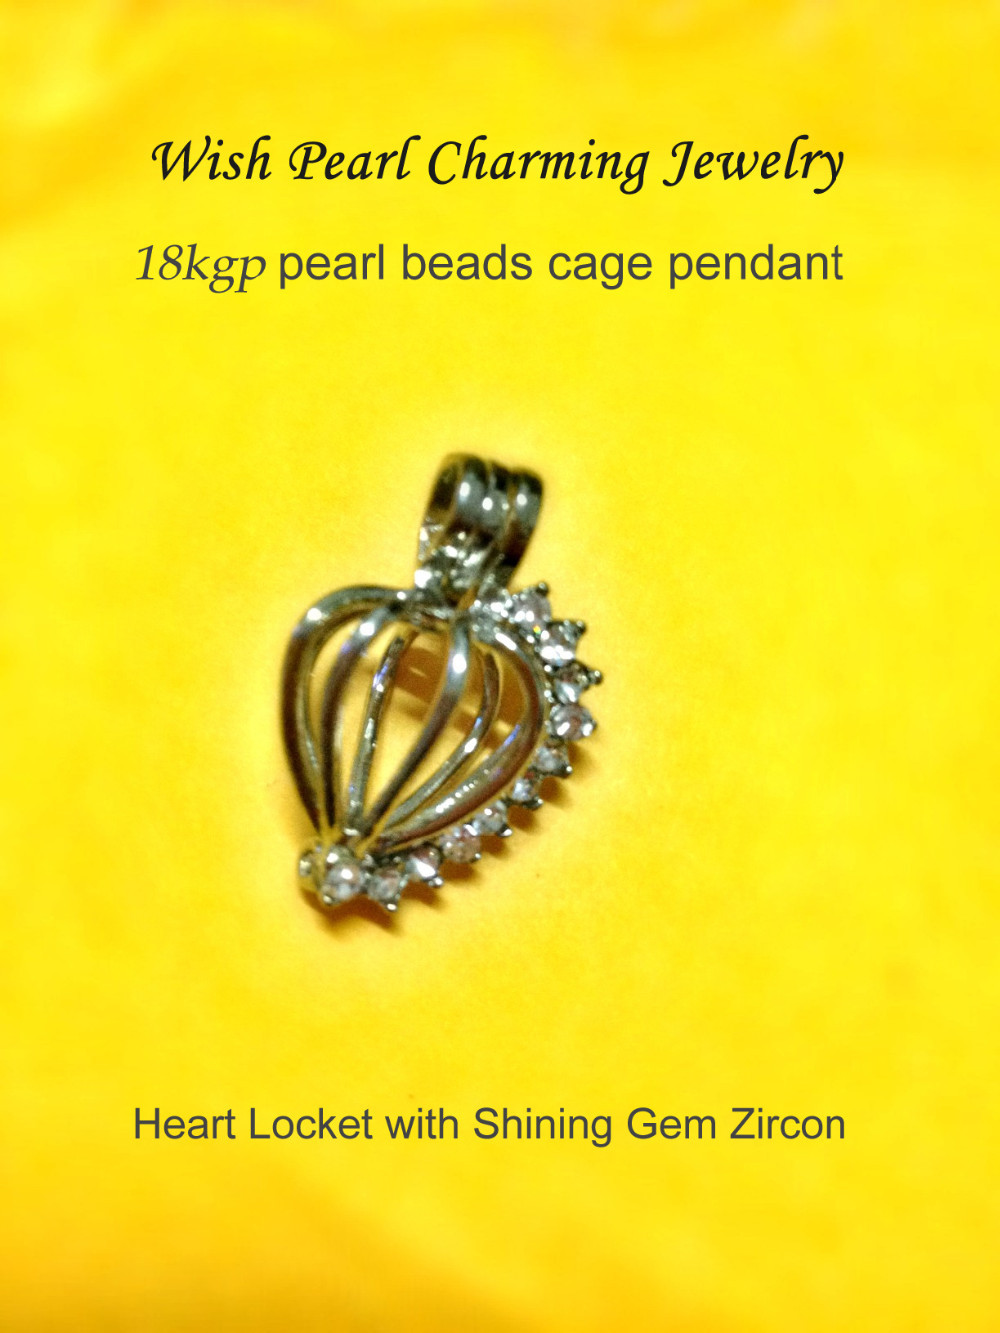 Heart Locket with Shining Gem Zircon